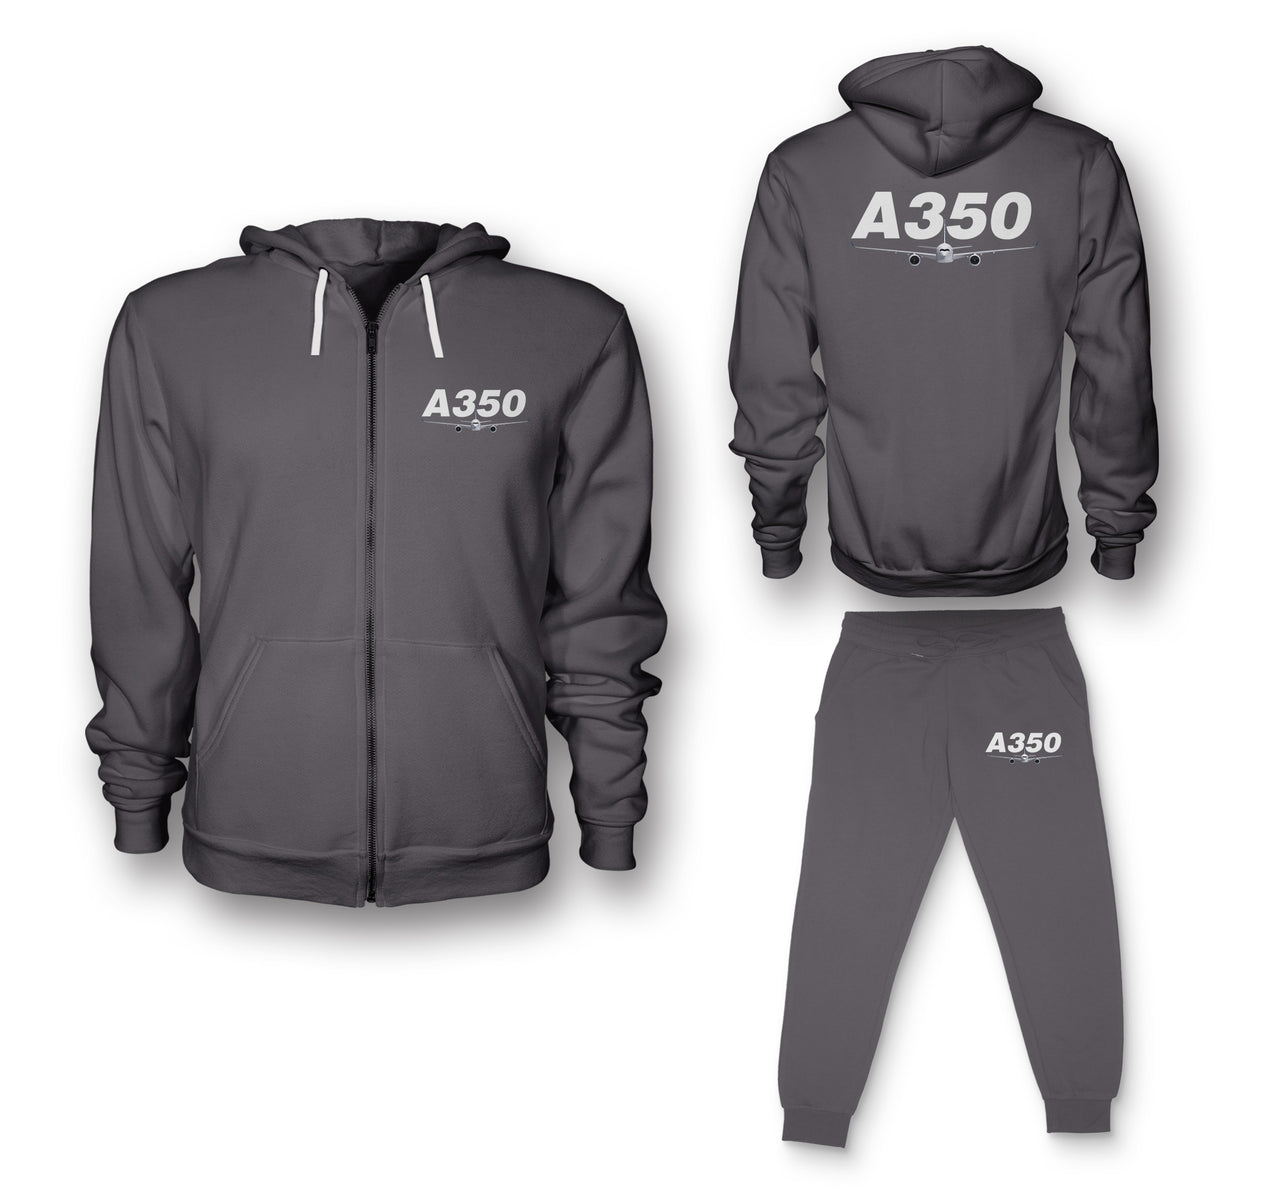 Super Airbus A350 Designed Zipped Hoodies & Sweatpants Set